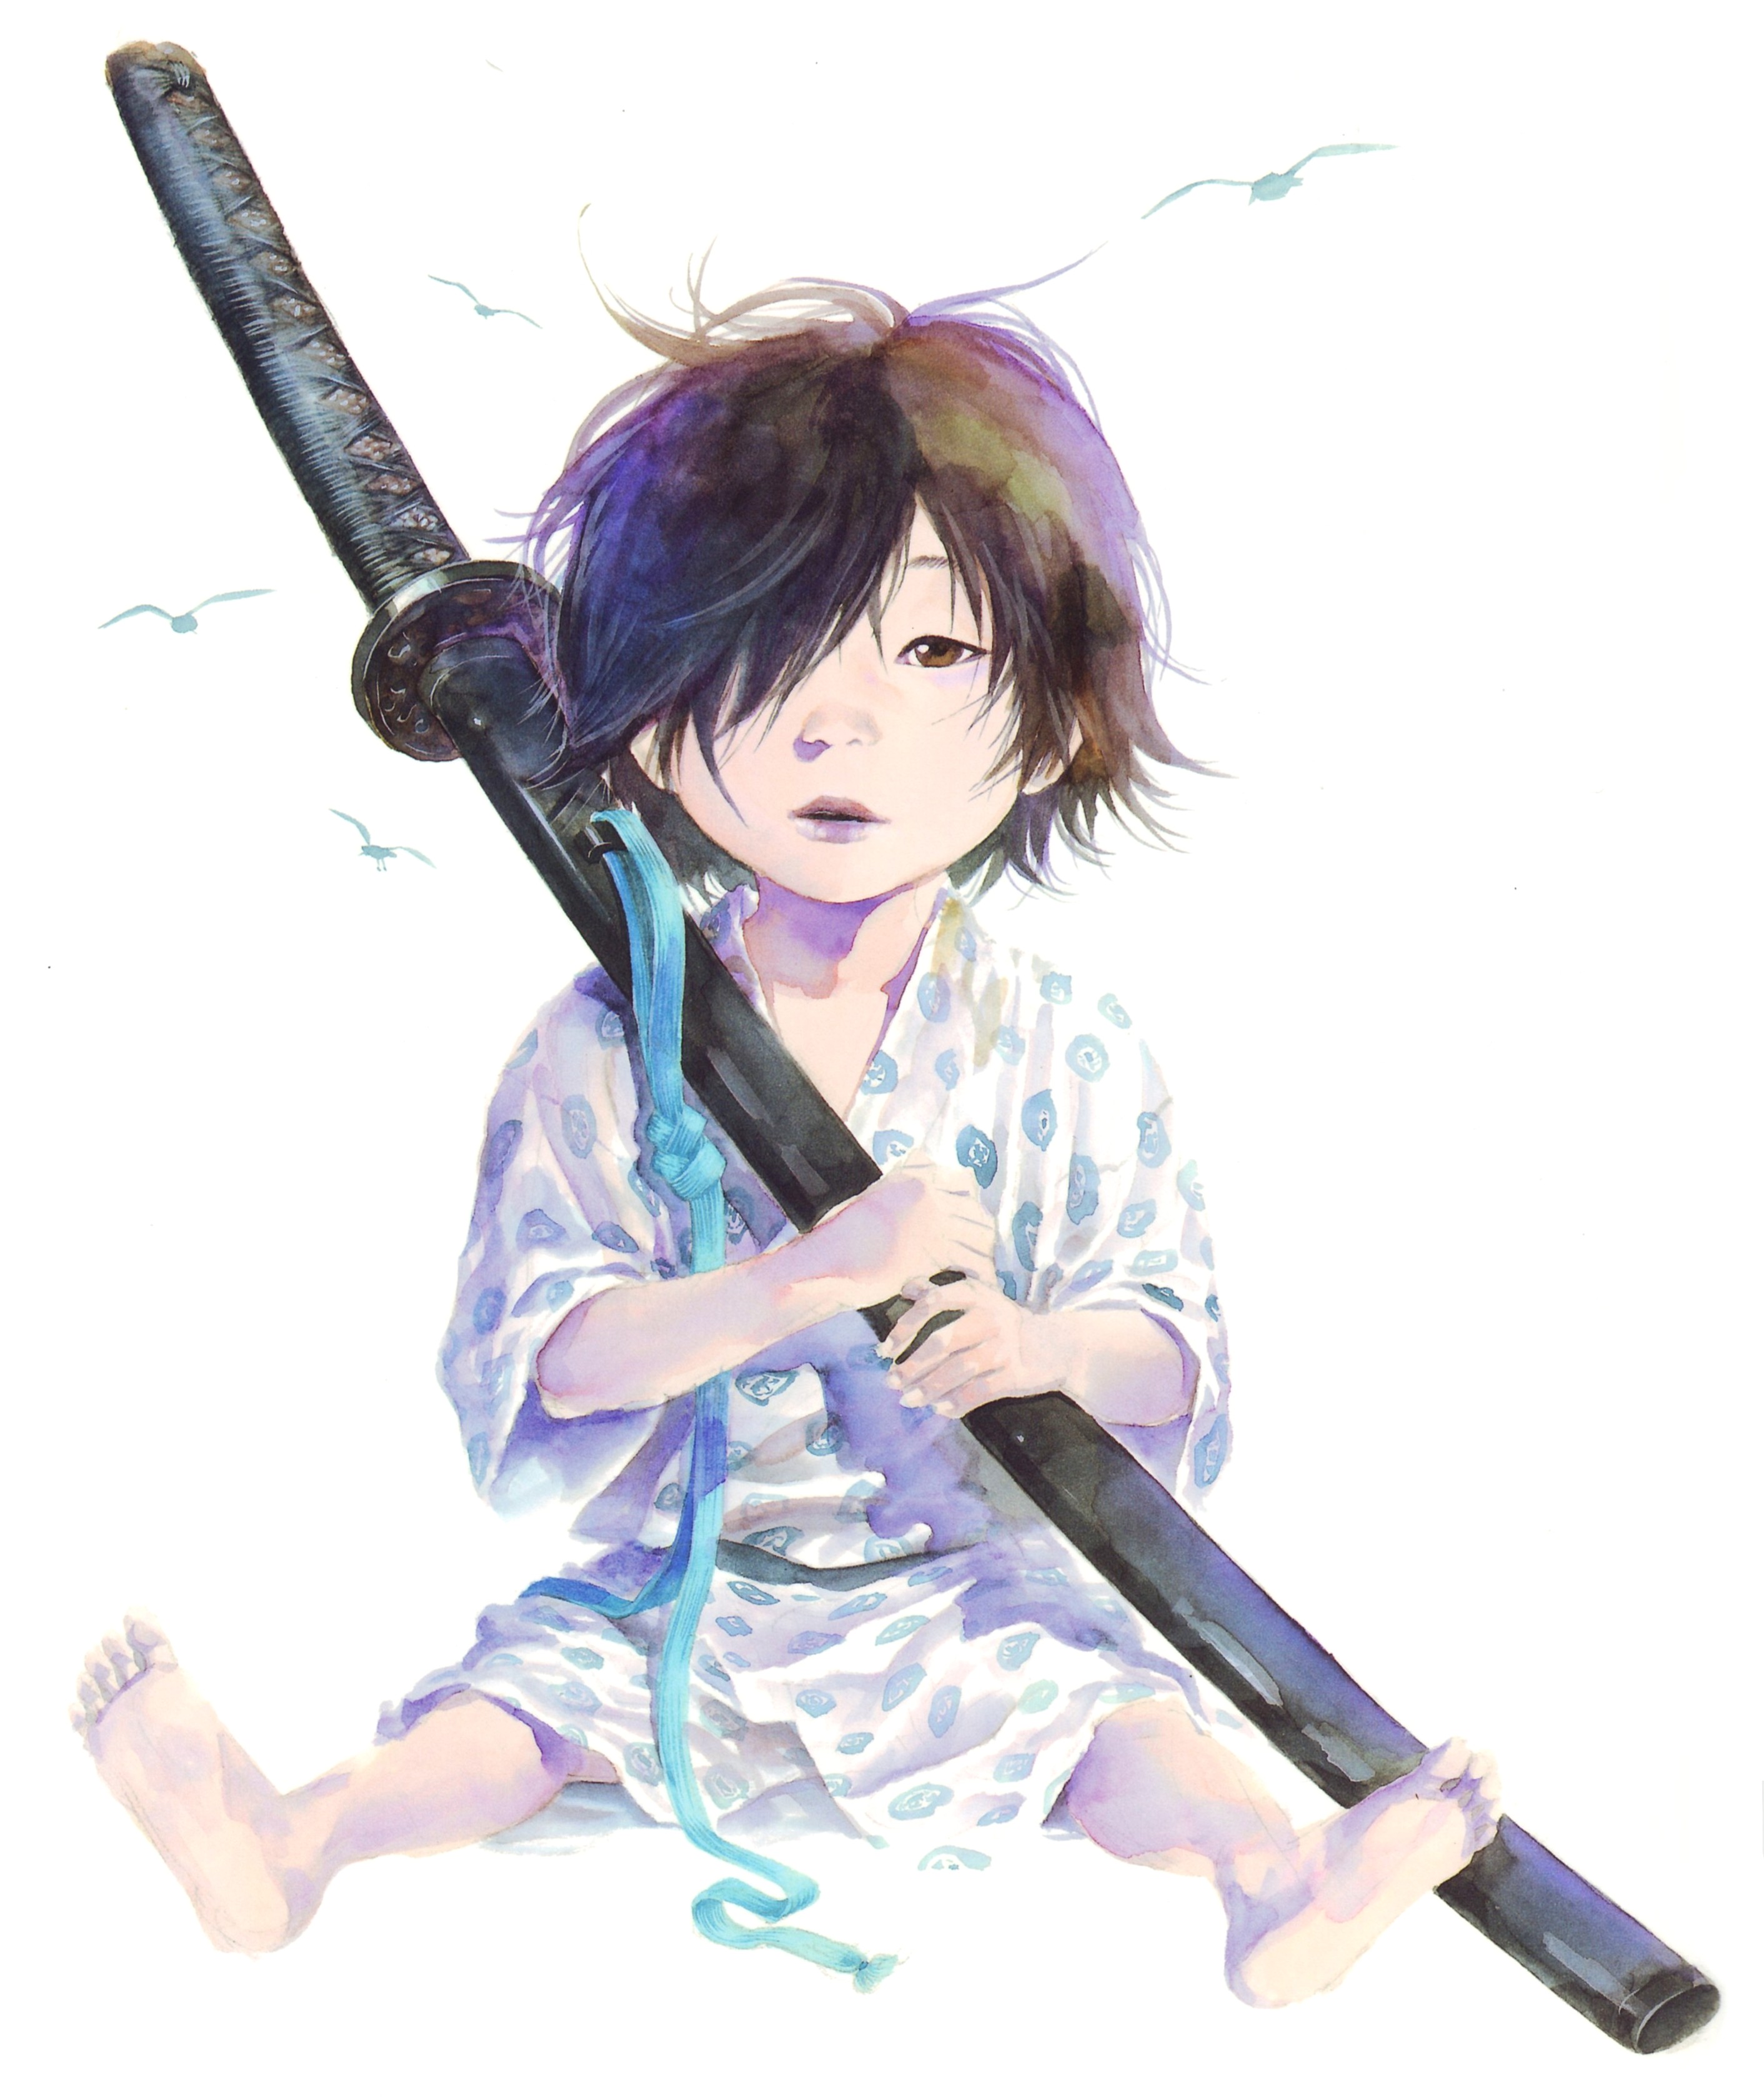 Anime 2823x3358 Vagabond Inoue takehiko Vagabond: Water samurai watercolor sword